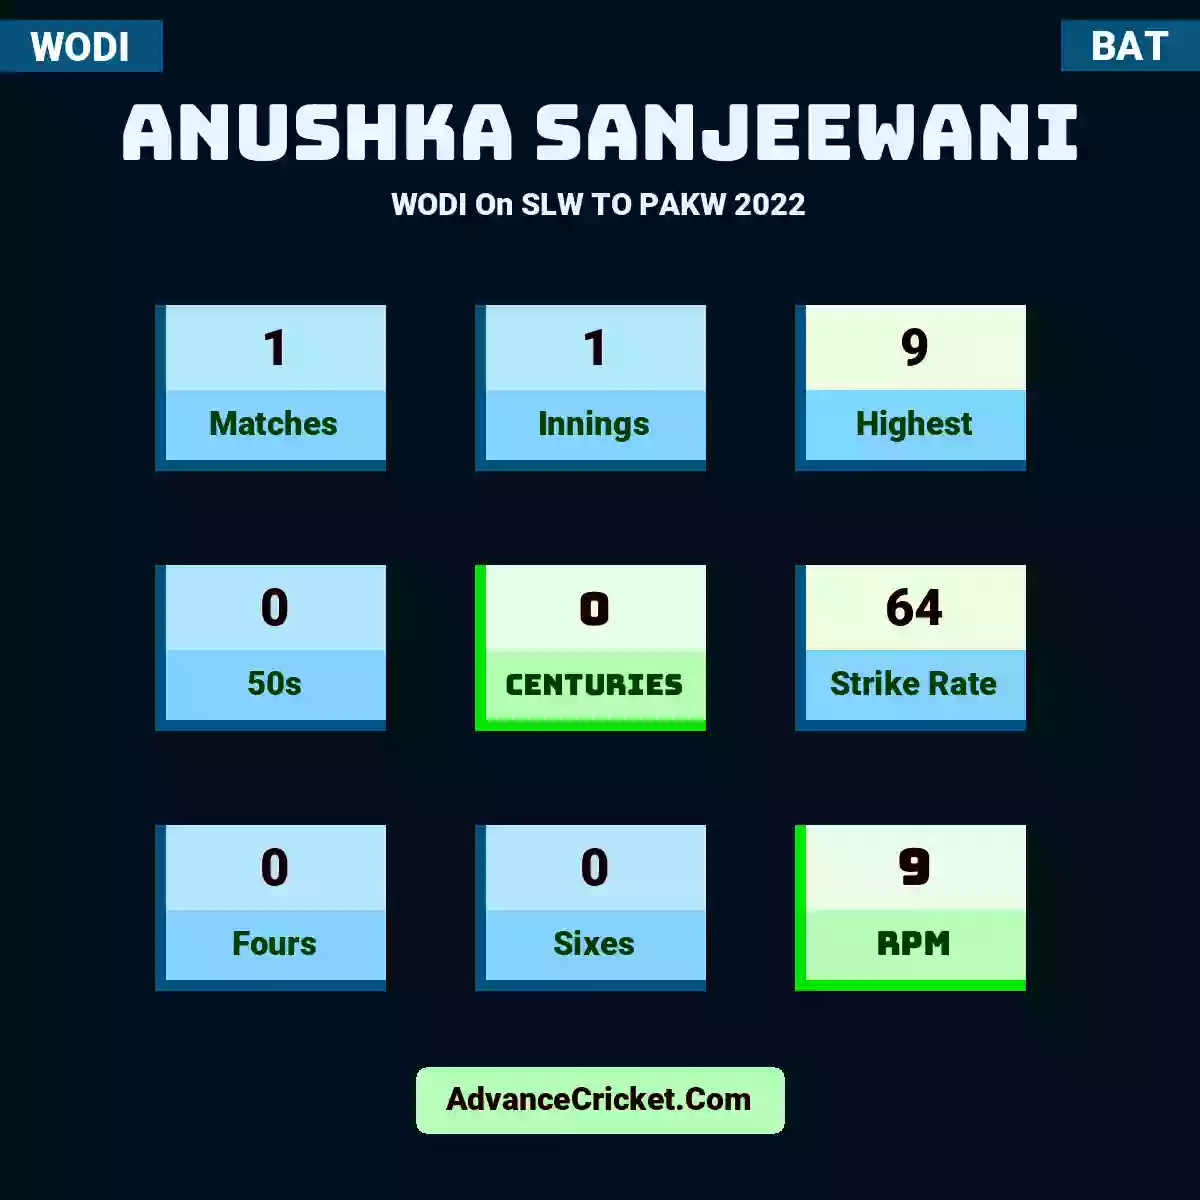 Anushka Sanjeewani WODI  On SLW TO PAKW 2022, Anushka Sanjeewani played 1 matches, scored 9 runs as highest, 0 half-centuries, and 0 centuries, with a strike rate of 64. A.Sanjeewani hit 0 fours and 0 sixes, with an RPM of 9.